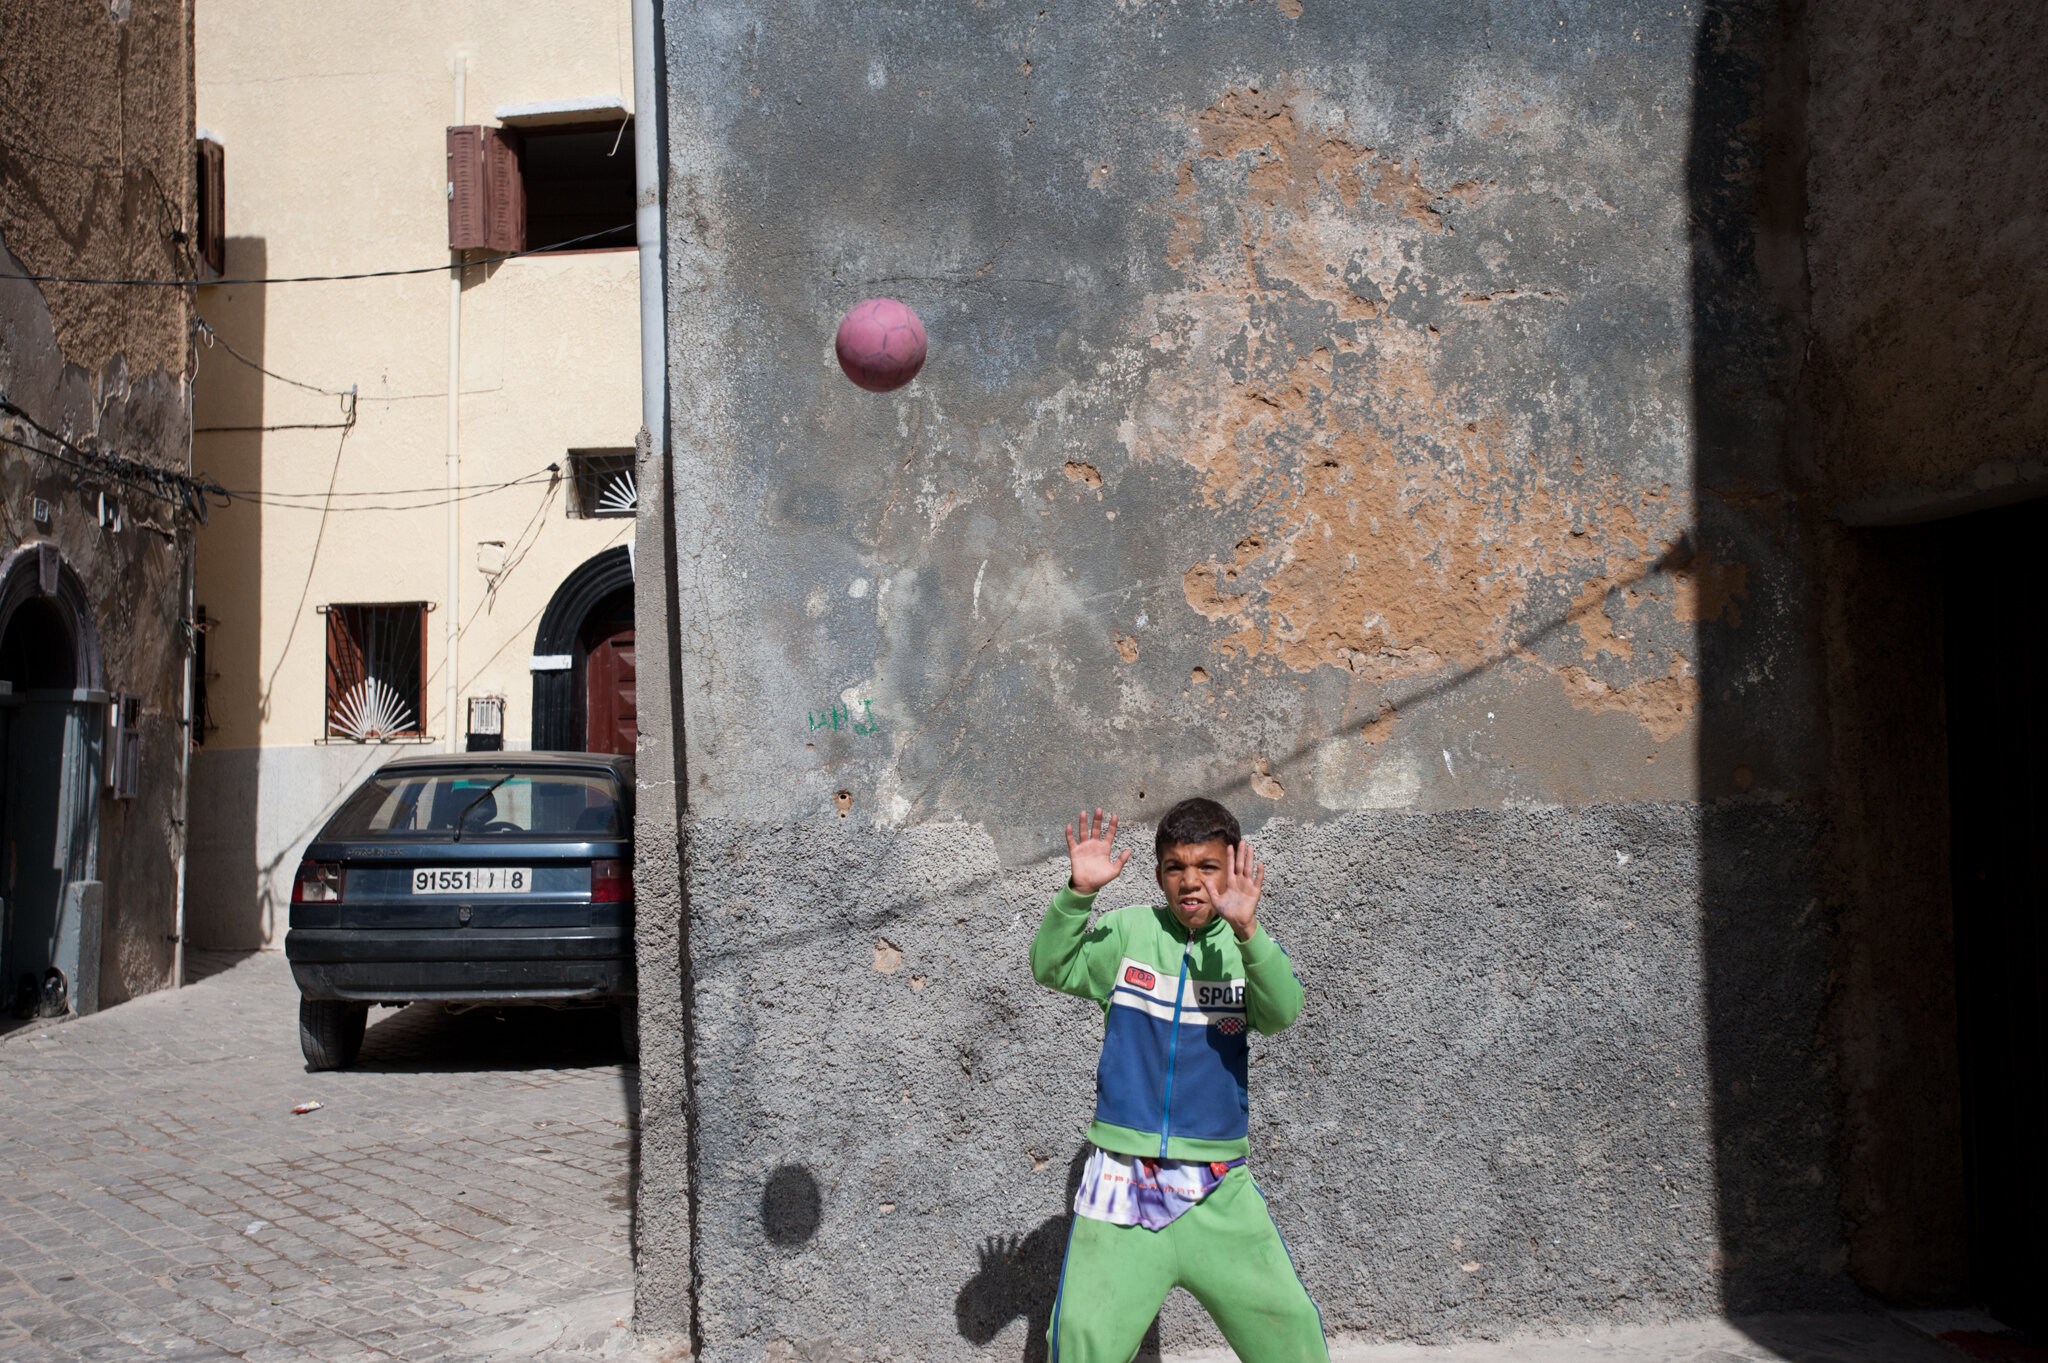    Morocco - El Jadida     Kids playing soccer 